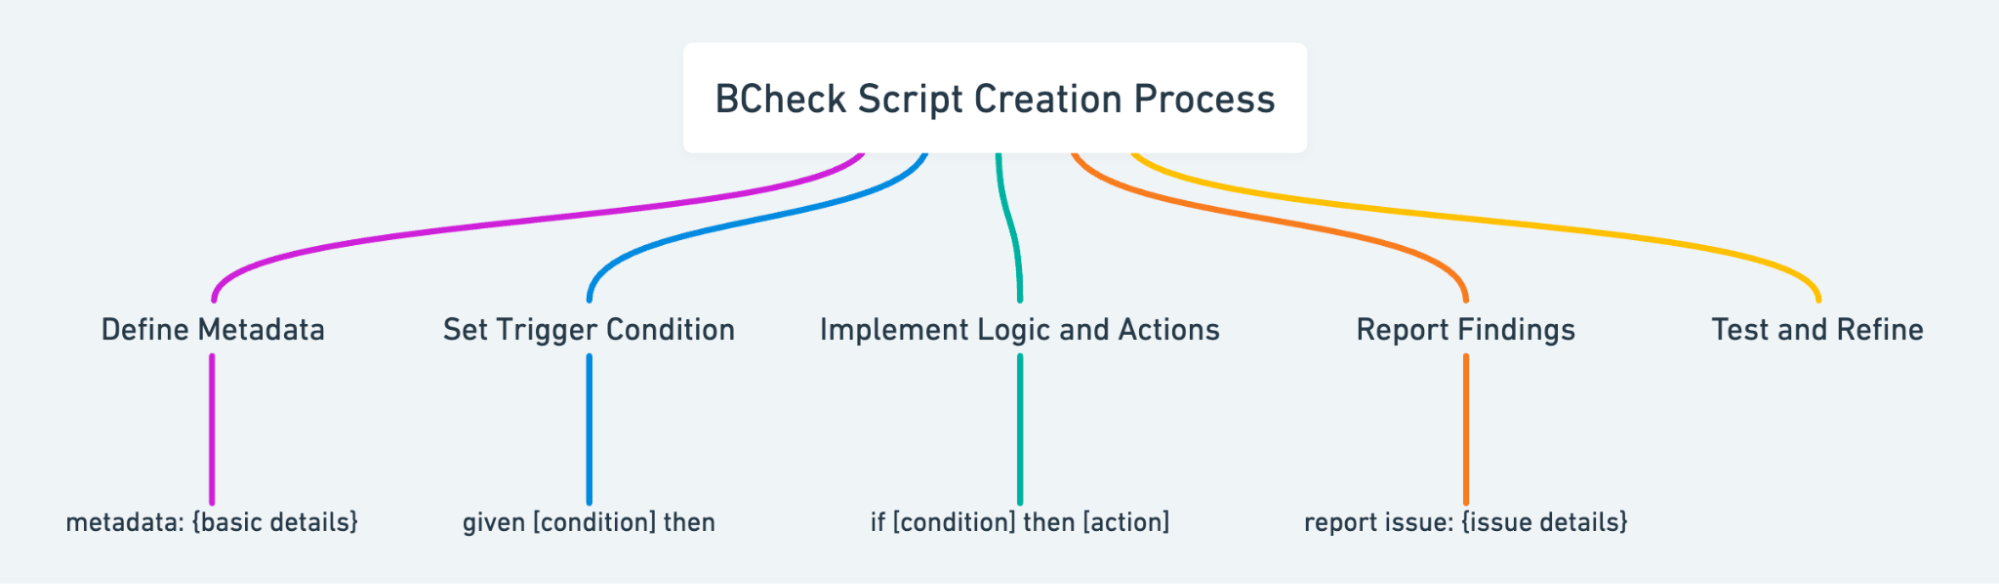 Burpe suite Bcheck script creation